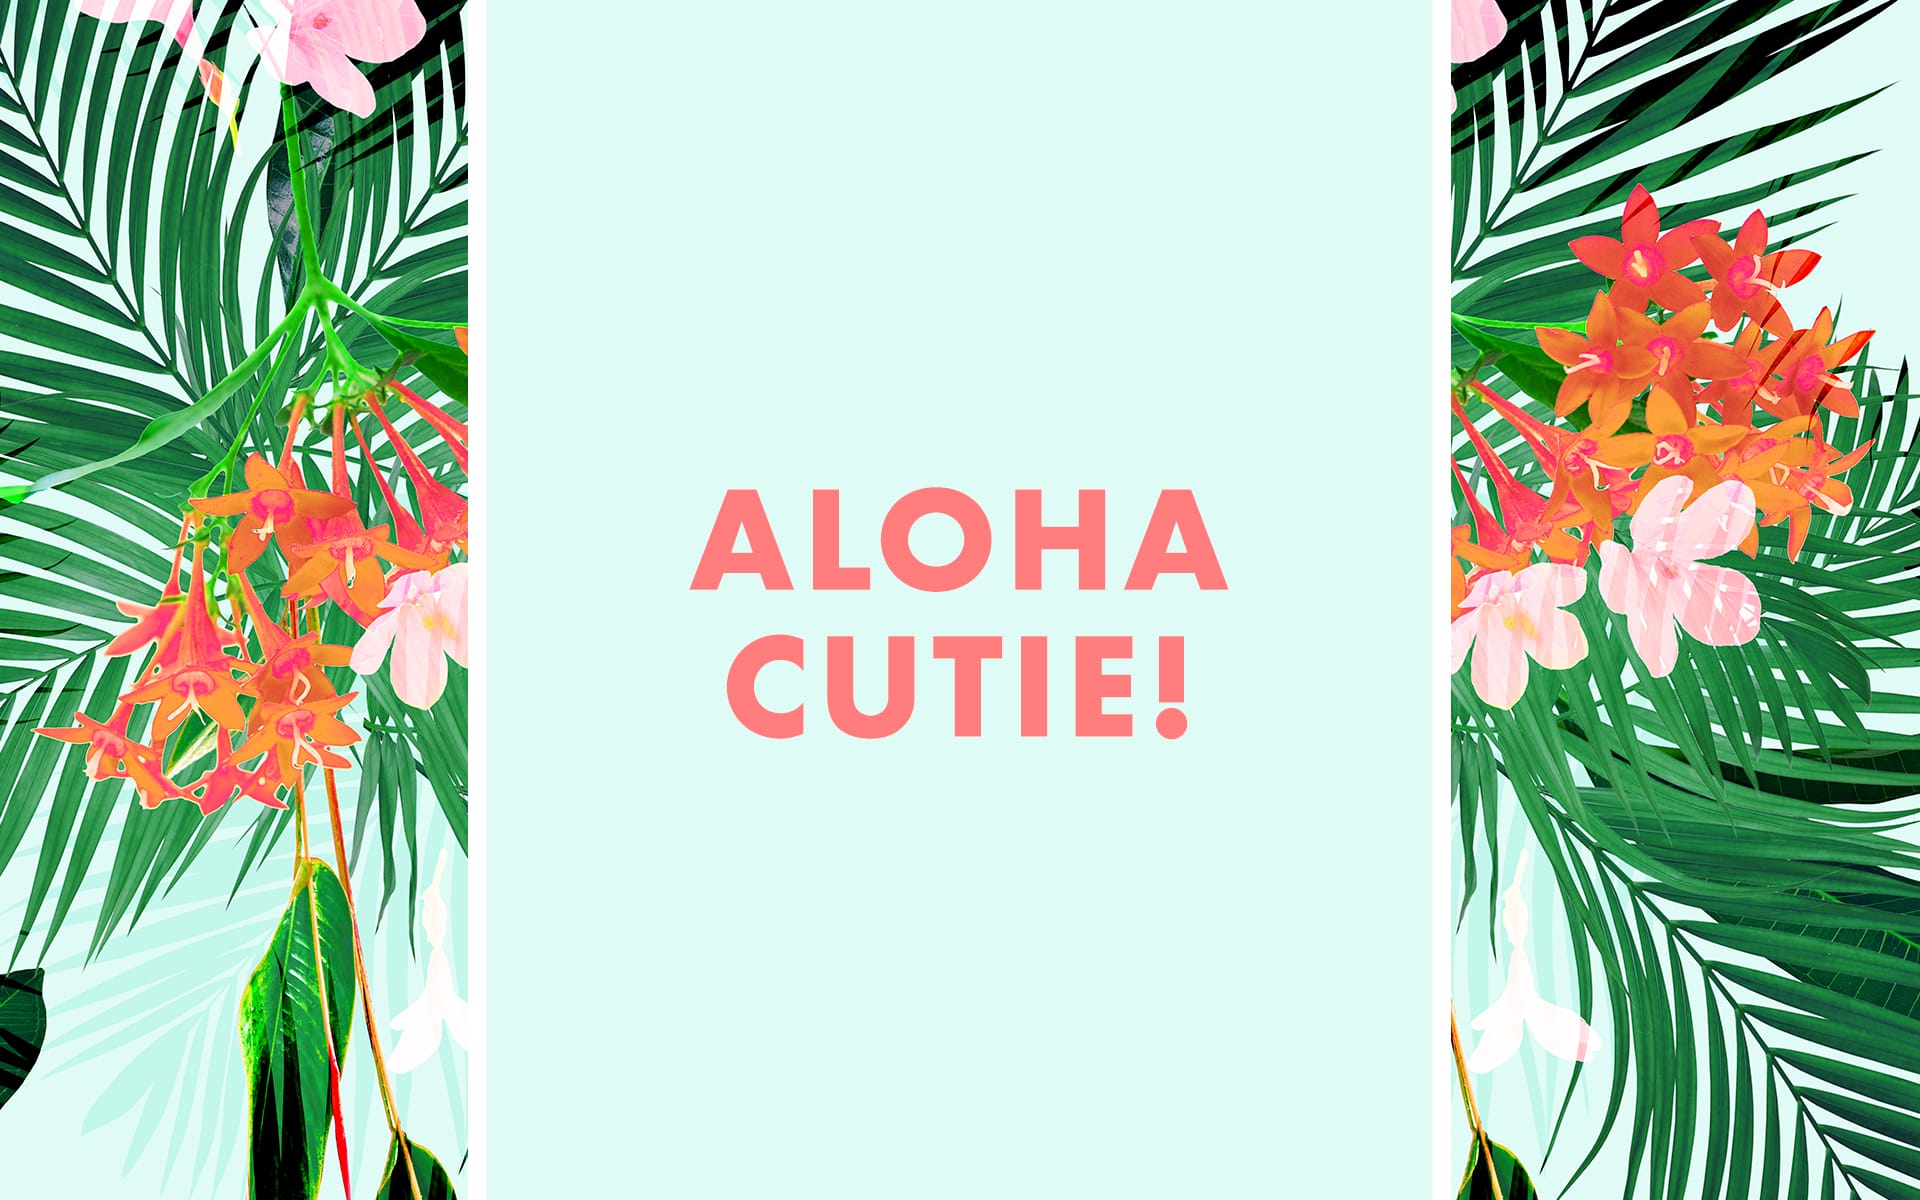 aloha tapete,pflanze,blatt,baum,blume,illustration